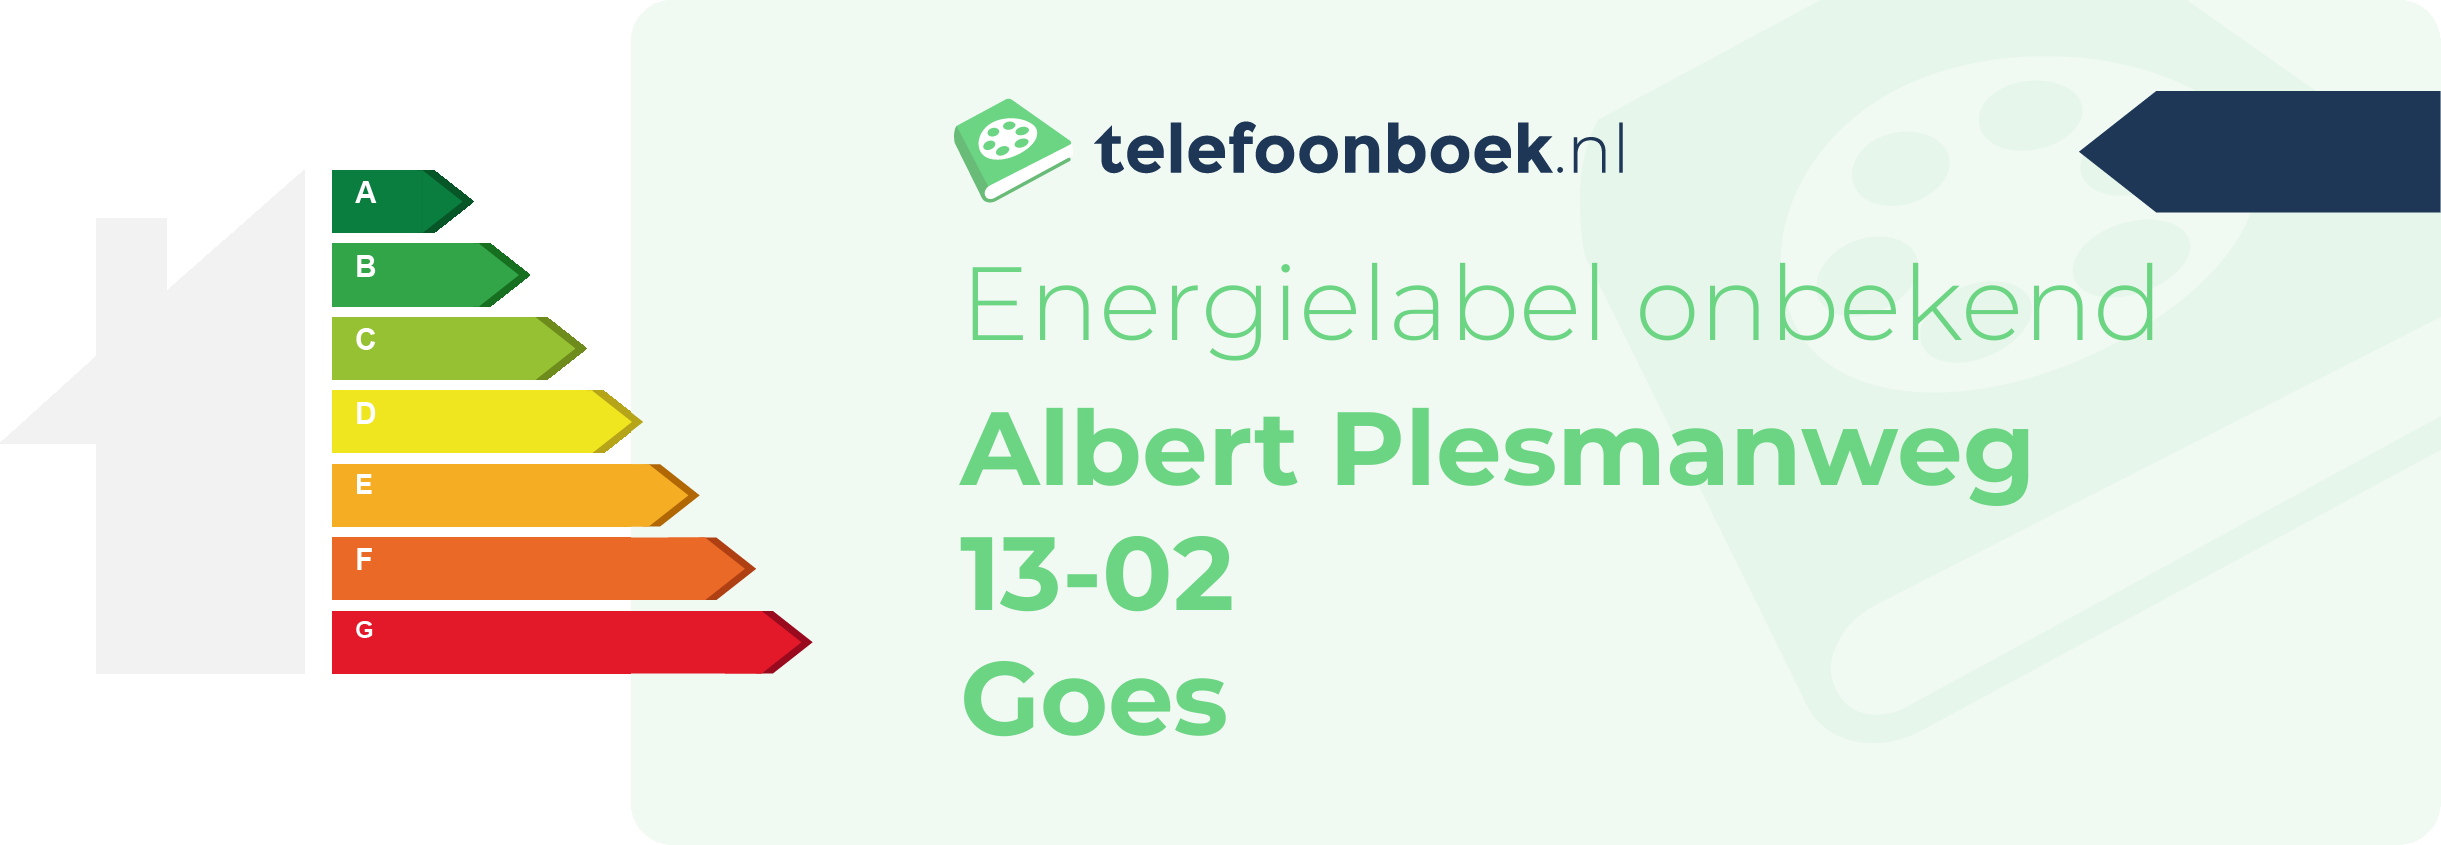 Energielabel Albert Plesmanweg 13-02 Goes